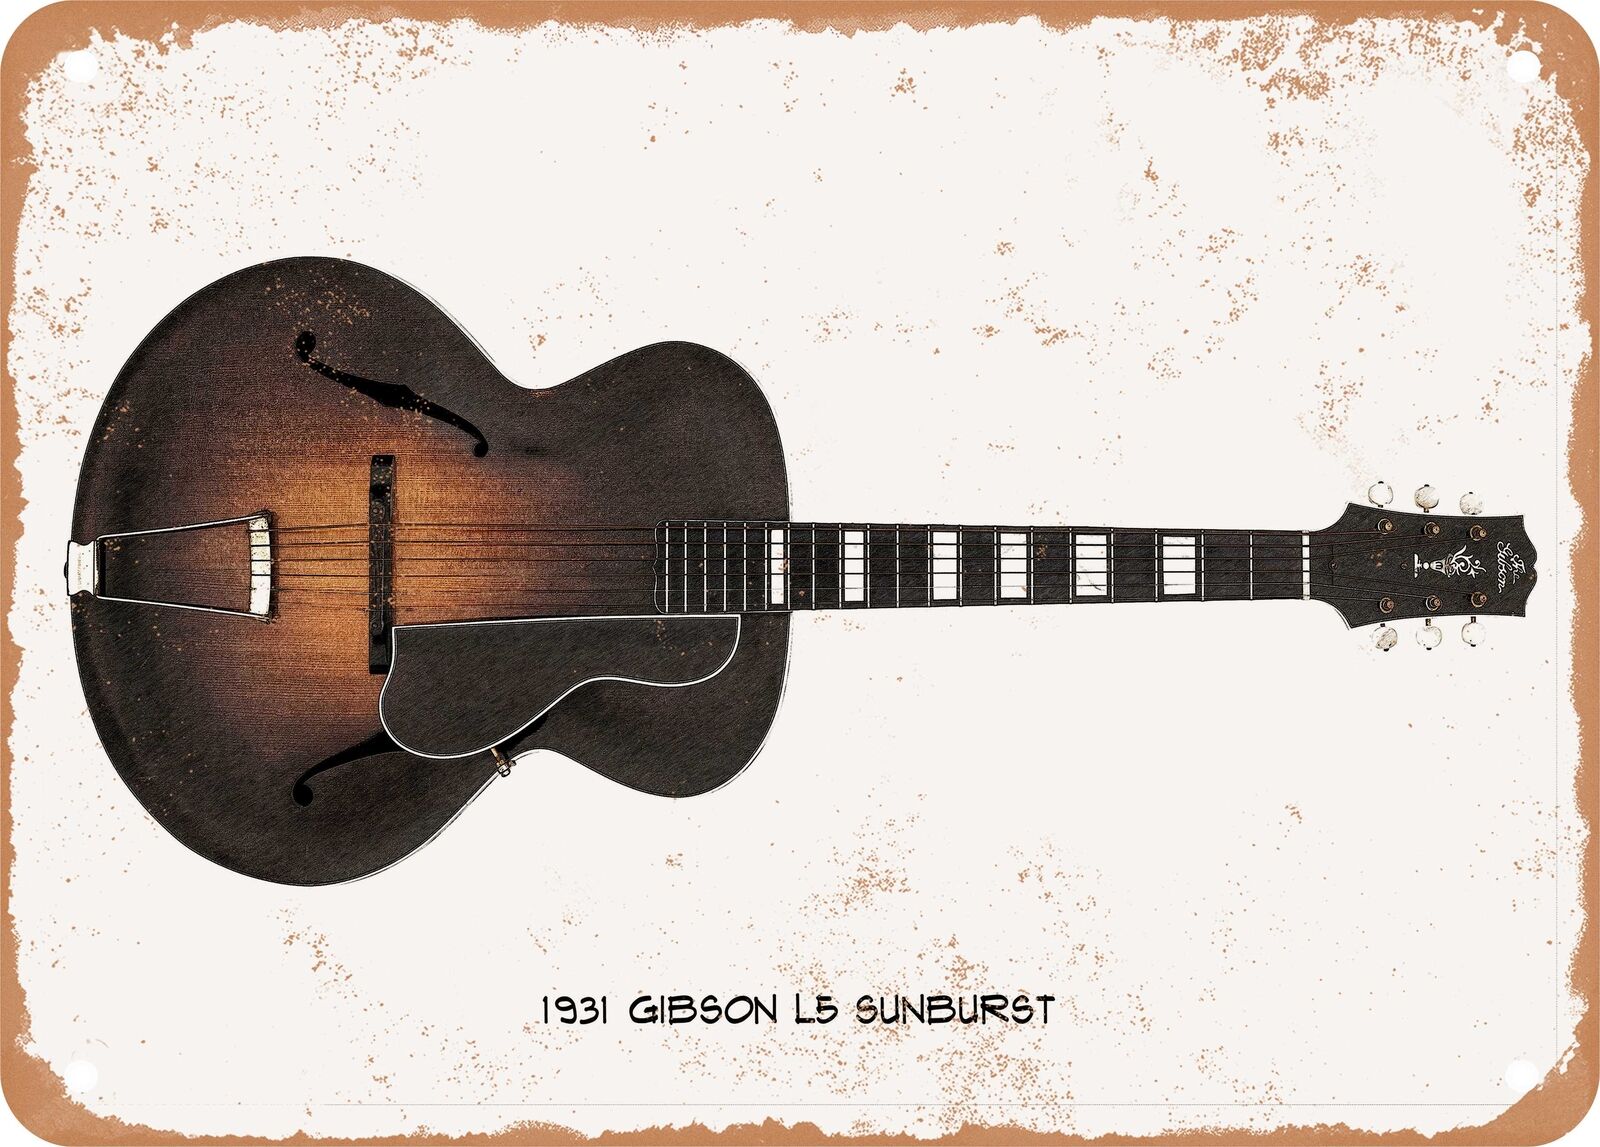 Guitar Art - 1931 Gibson L5 Sunburst Pencil Drawing - Rusty Look Metal Sign